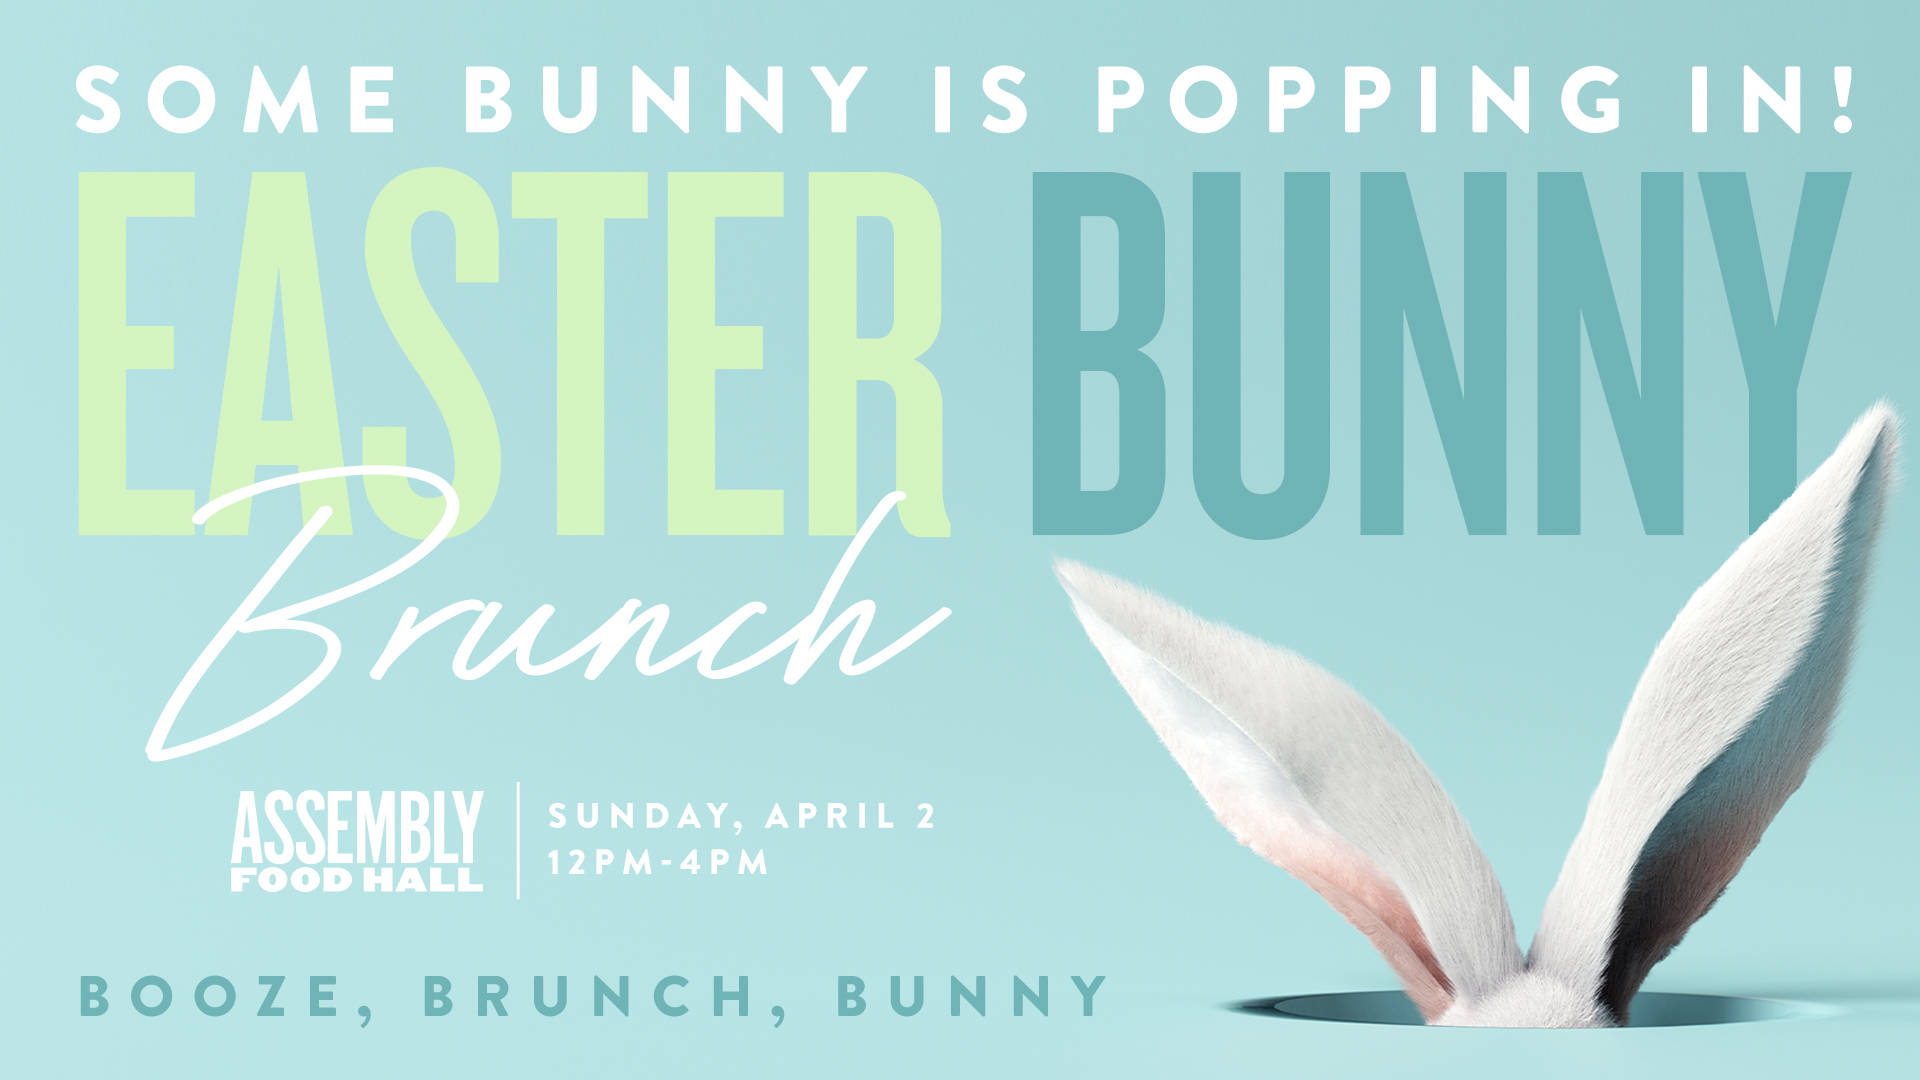 Promo image of Easter Bunny Brunch